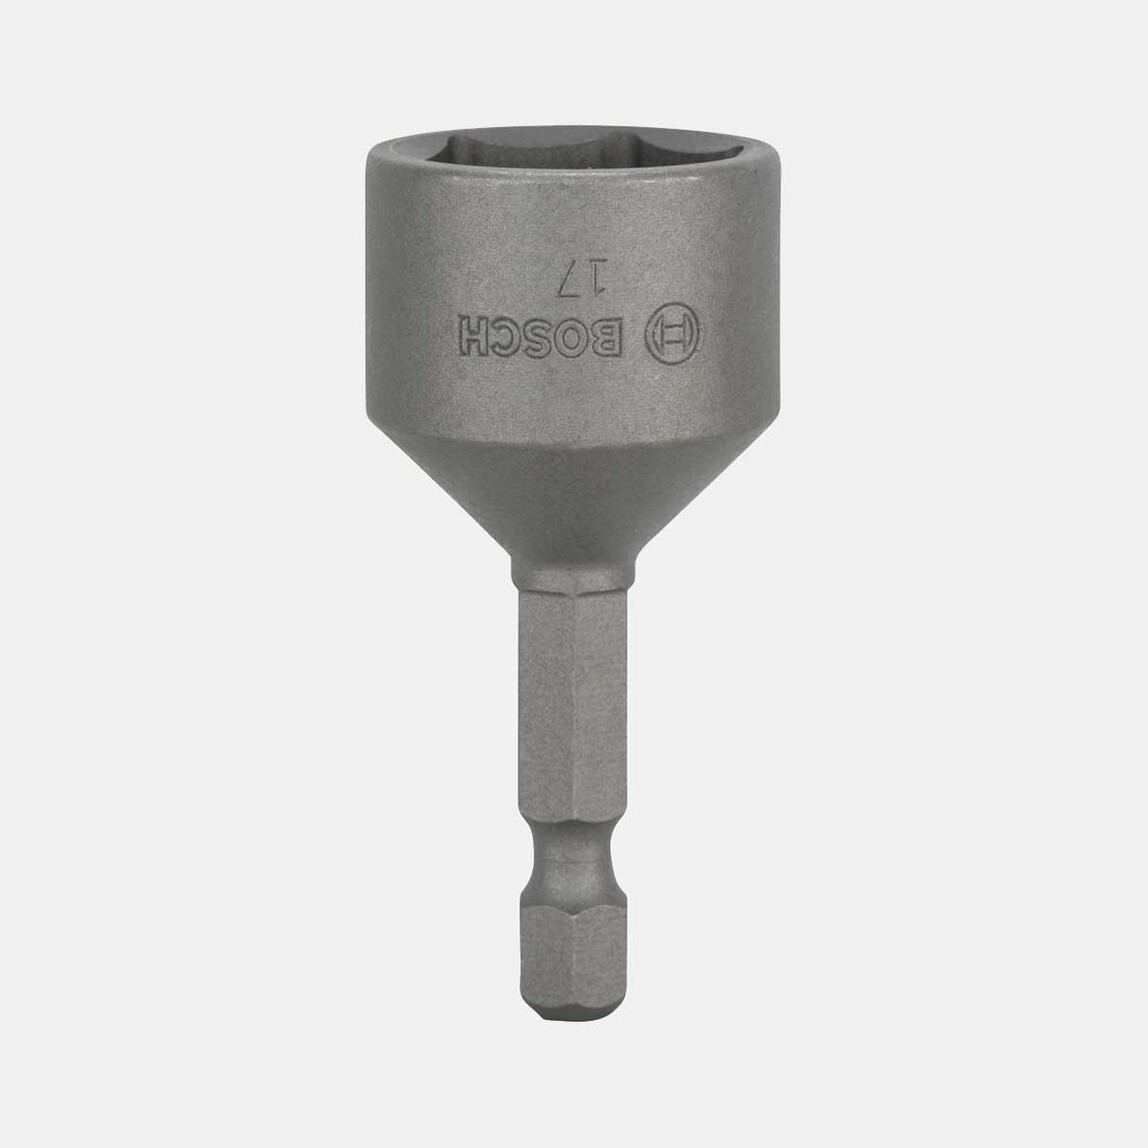    Bosch Lokma Anahtarı 50X17 mm  M10  